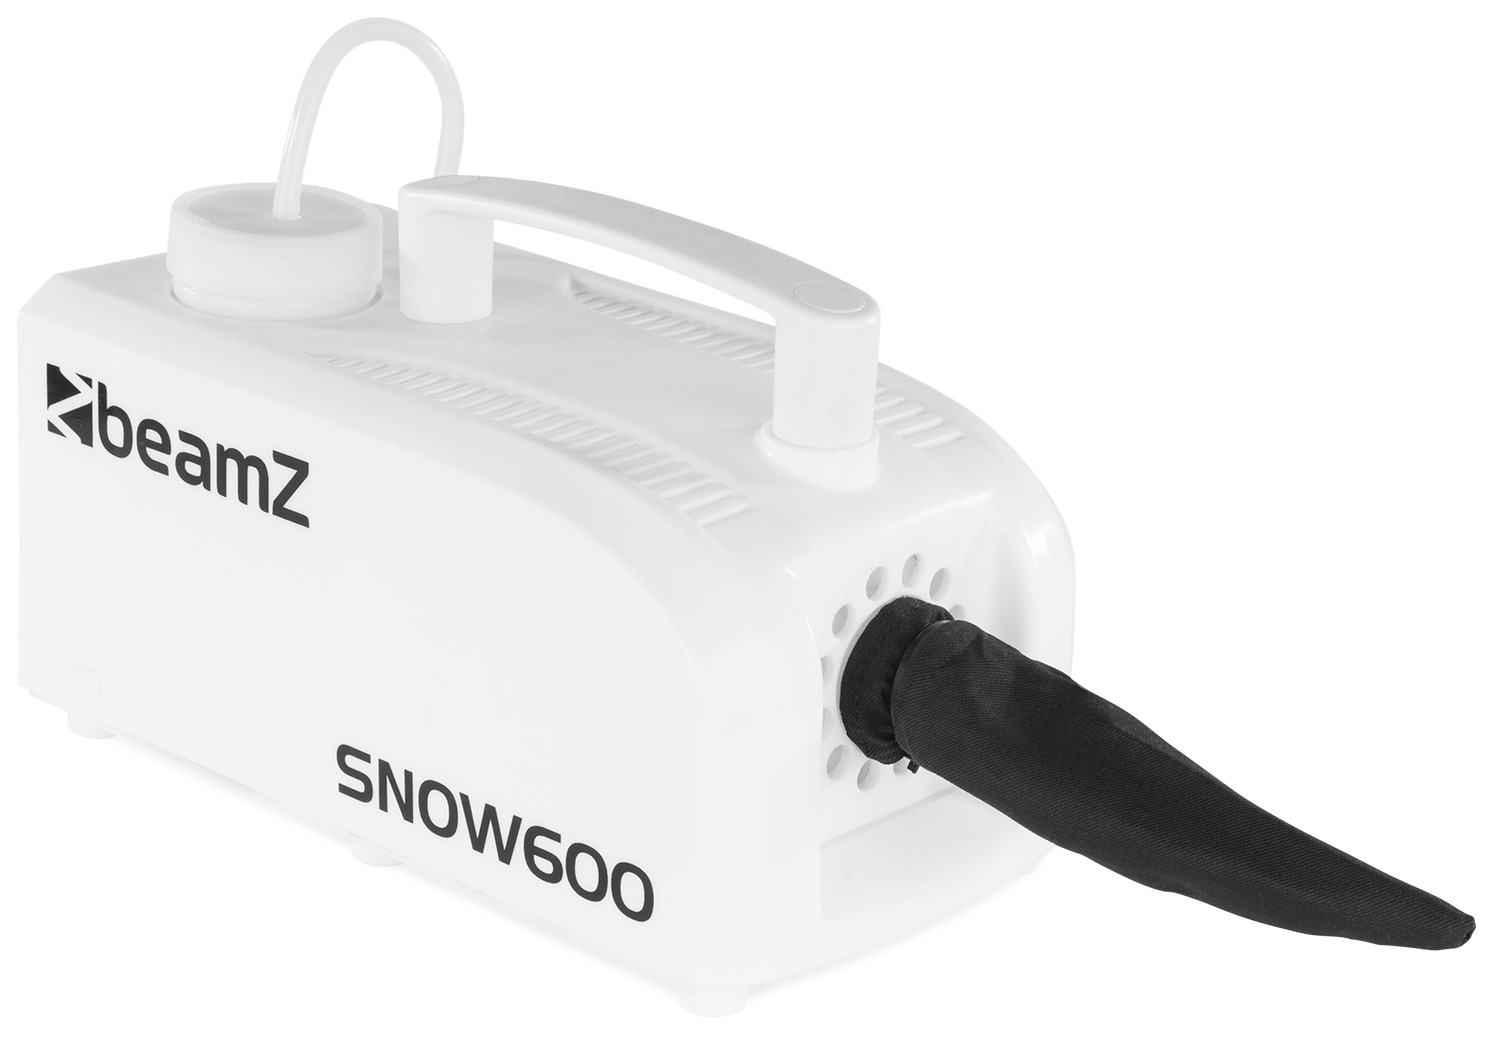 BeamZ - Machine à neige - SNOW900 - 115,00 € - SO-160.561 - BEAMZ